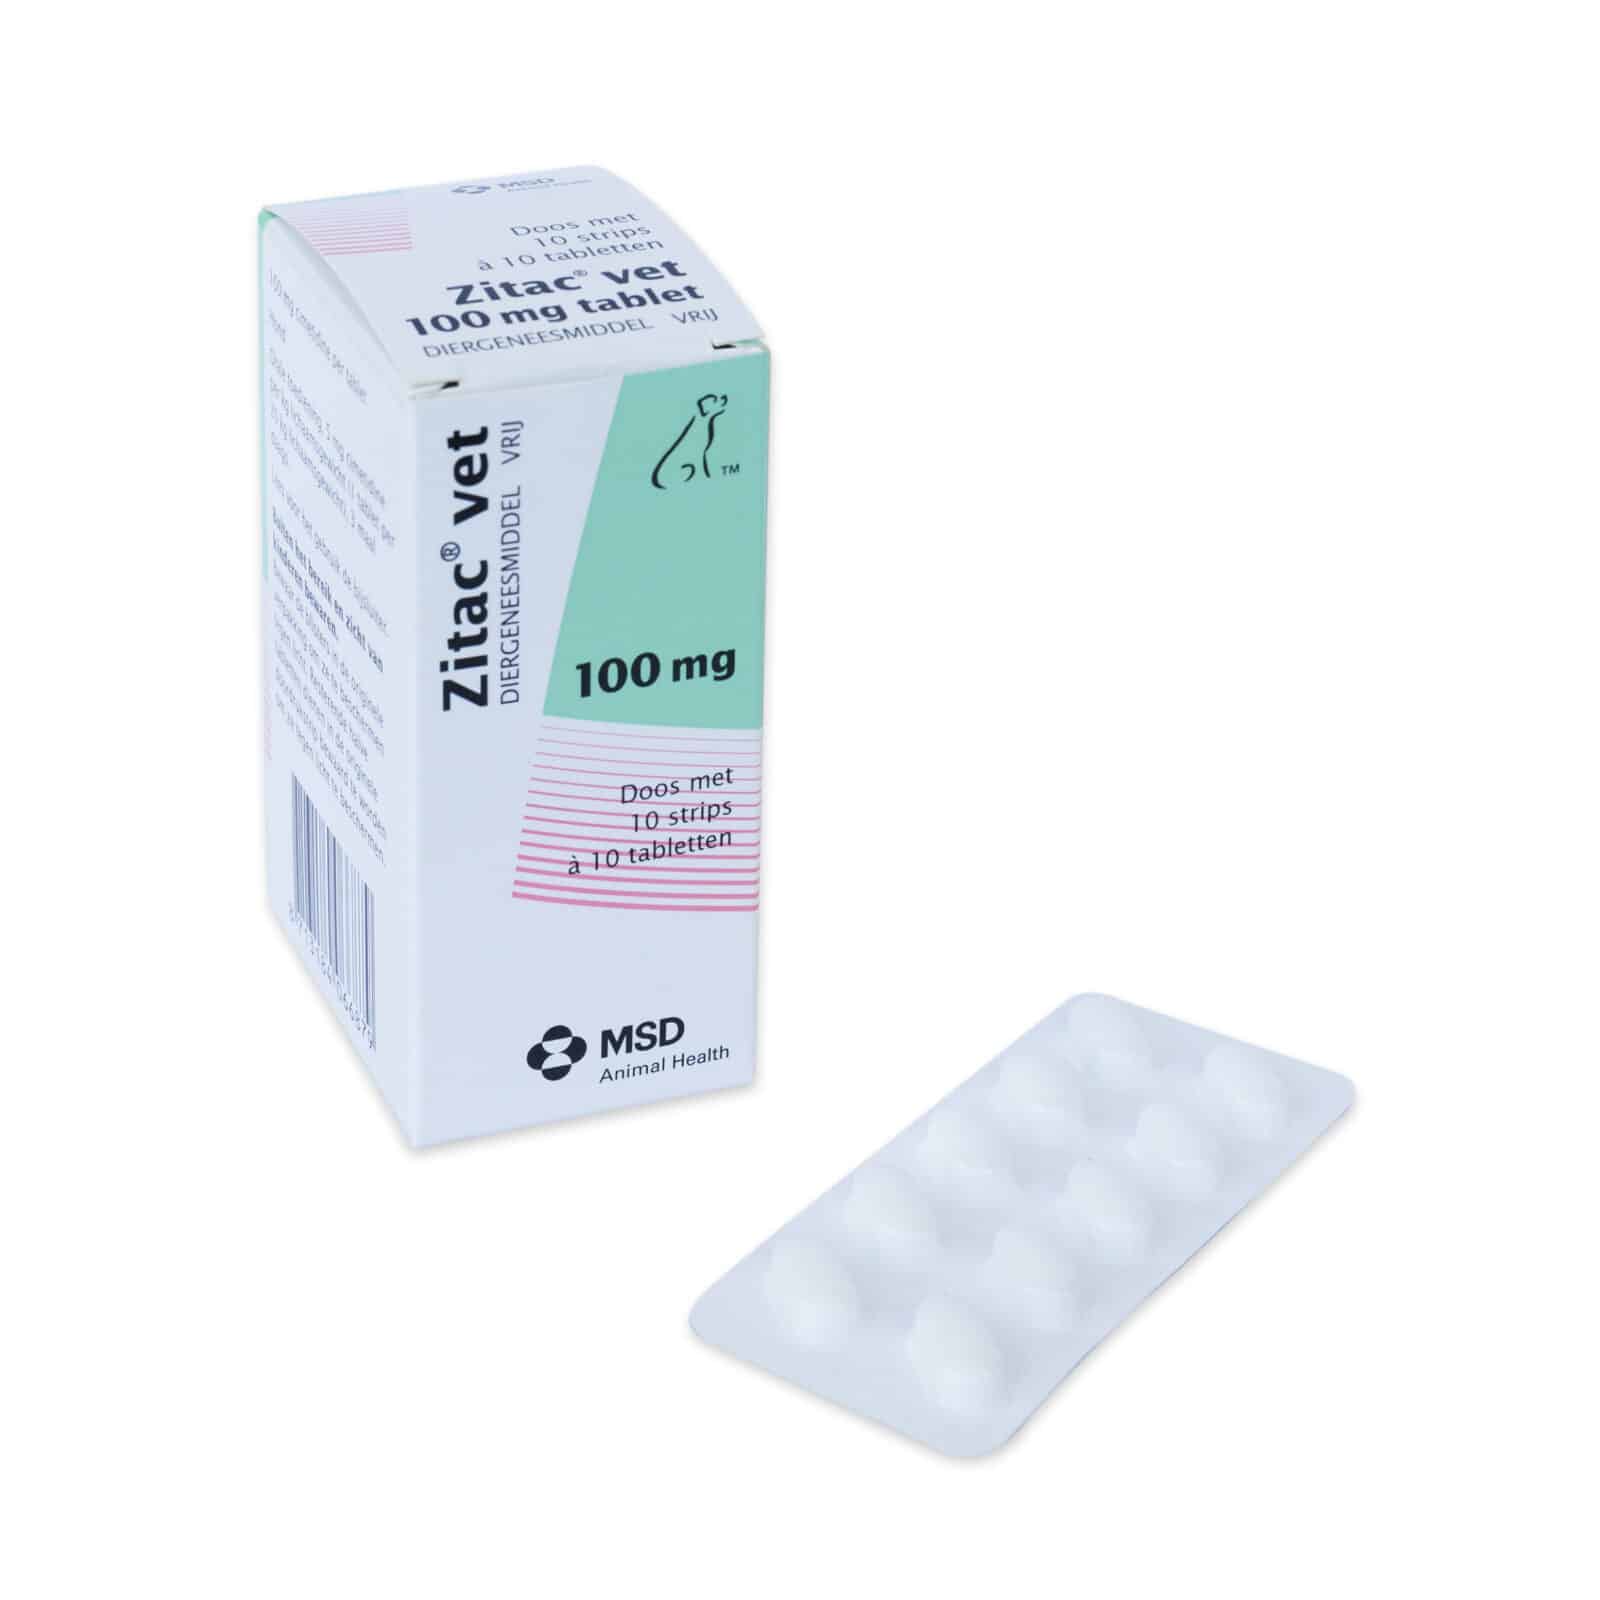 Zitac Vet 100 mg-4